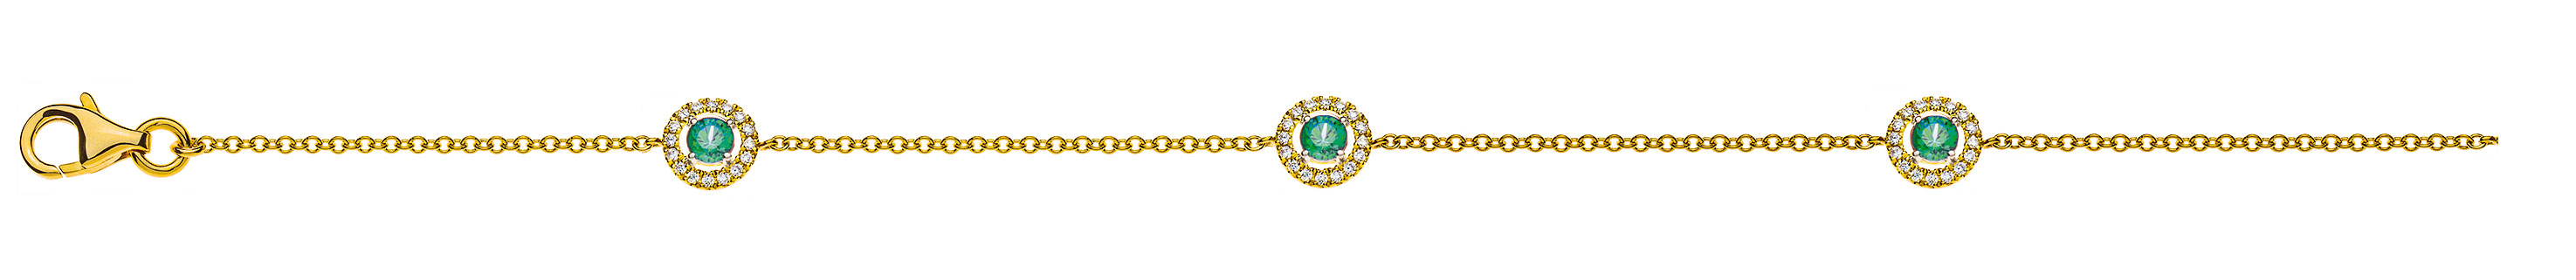 AURONOS Prestige Bracelet 18K Yellow Gold Emerald Diamond 19cm